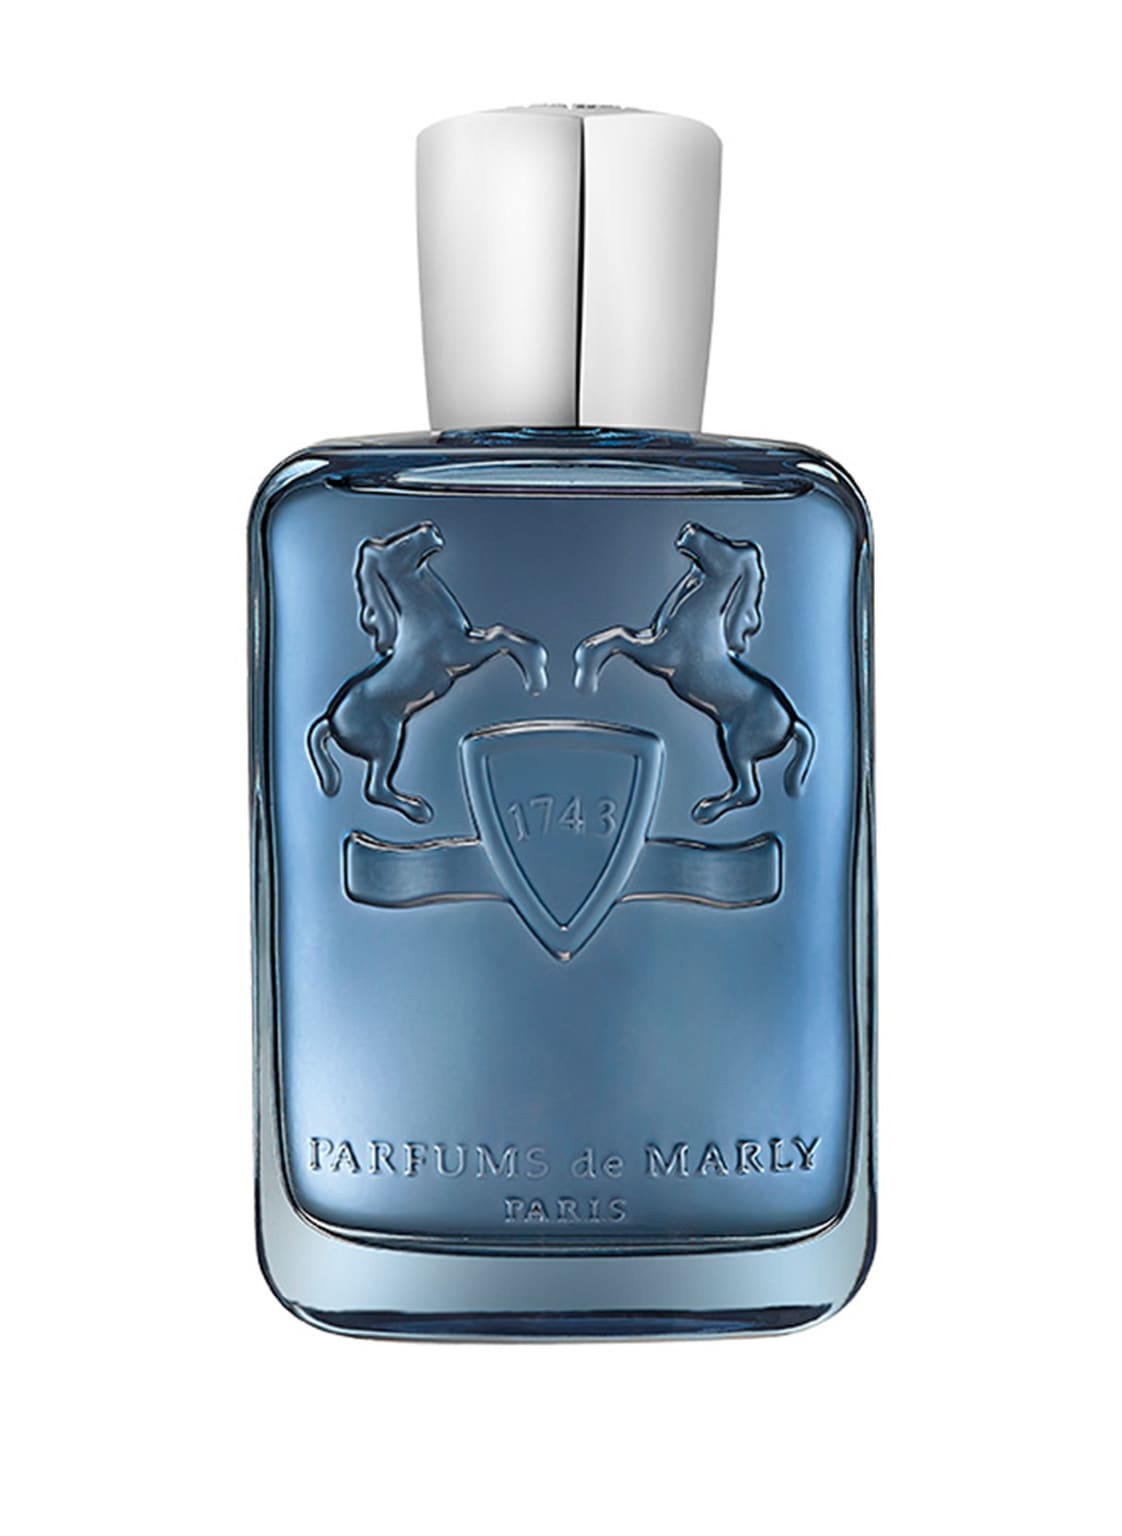 Parfums De Marly Sedley Eau de Parfum 125 ml von PARFUMS de MARLY